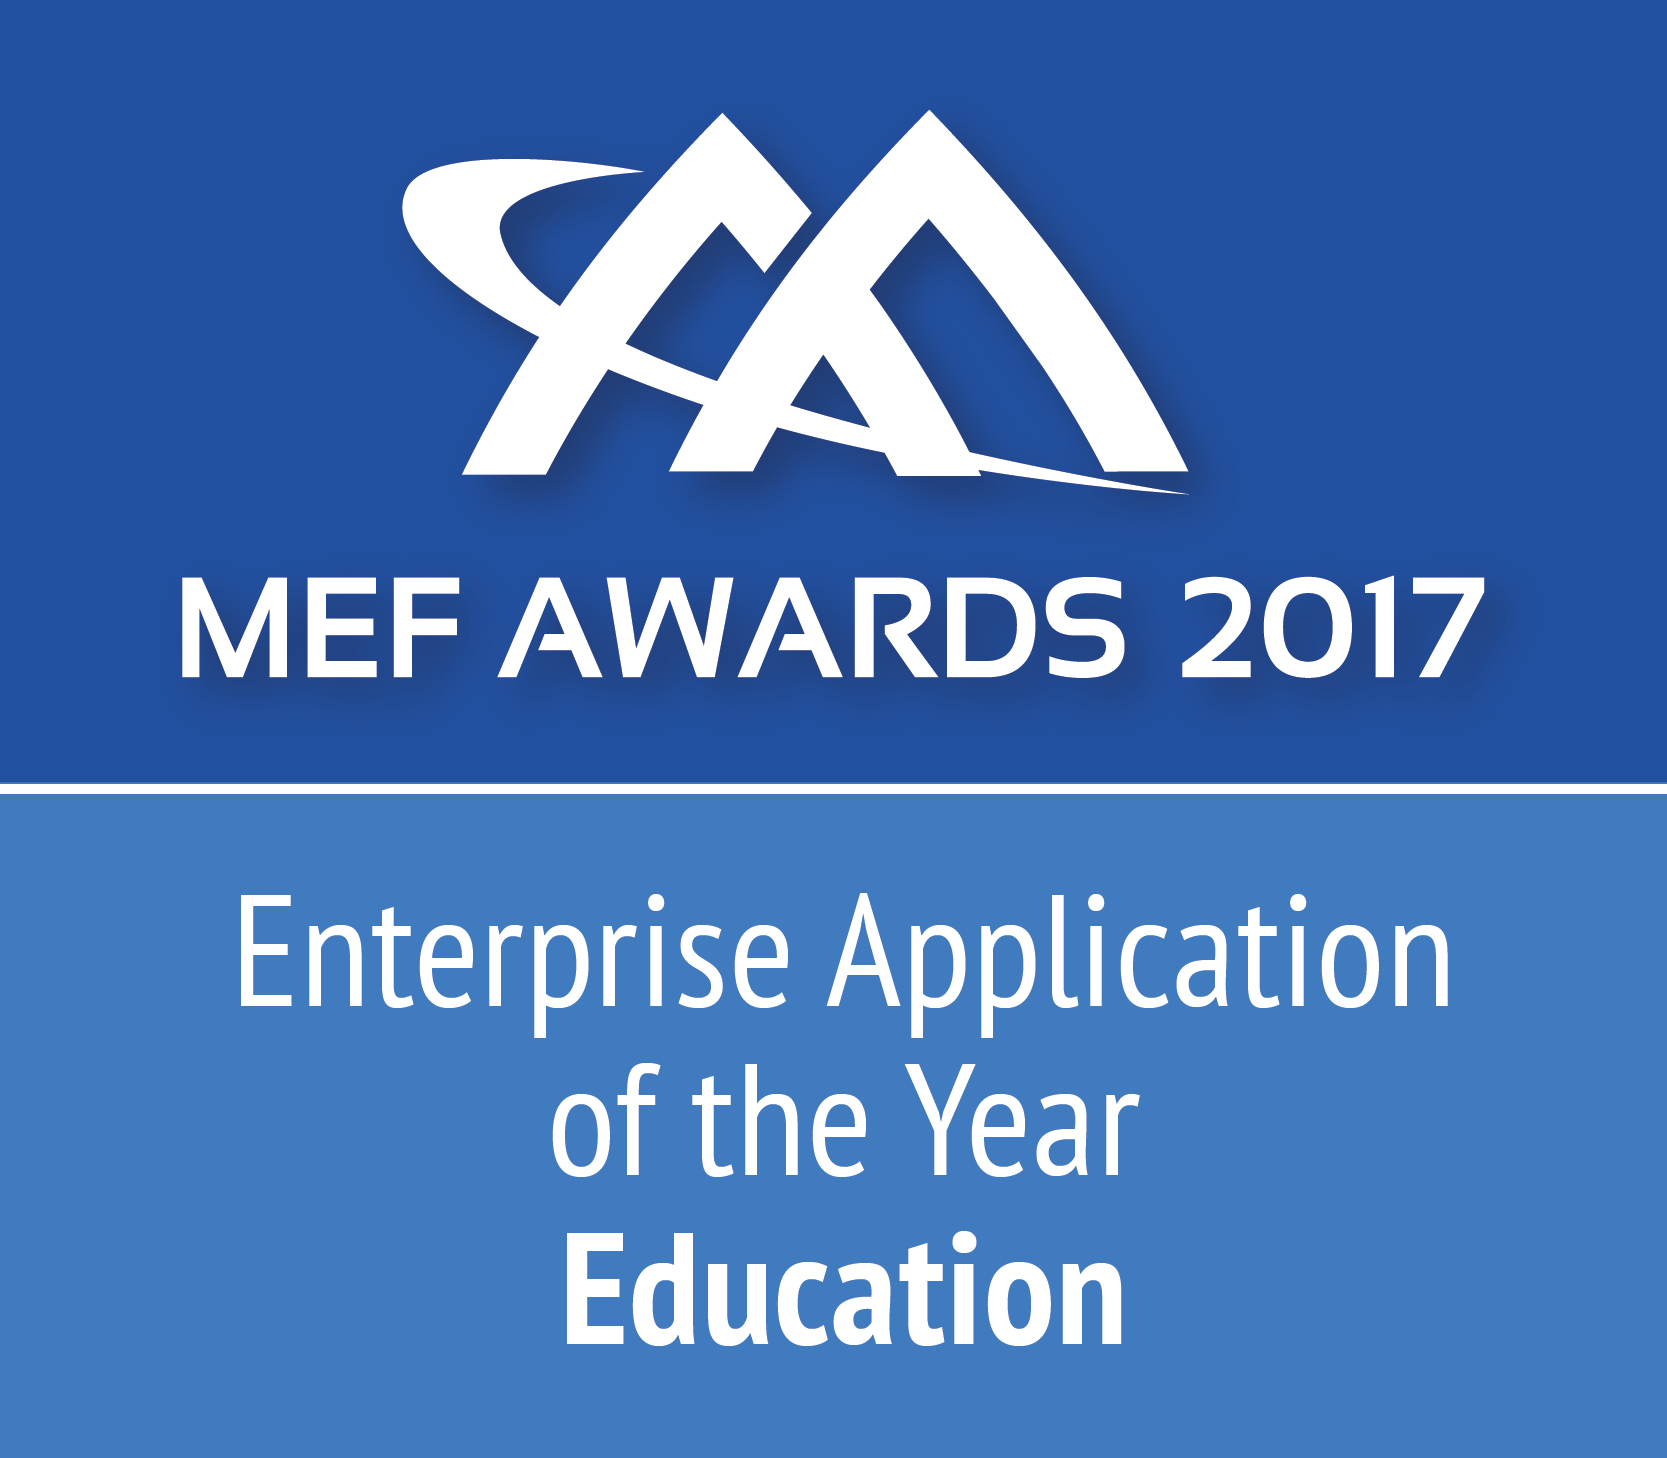 MEFAward2017_EnterpriseAppAwards_Educ_r1